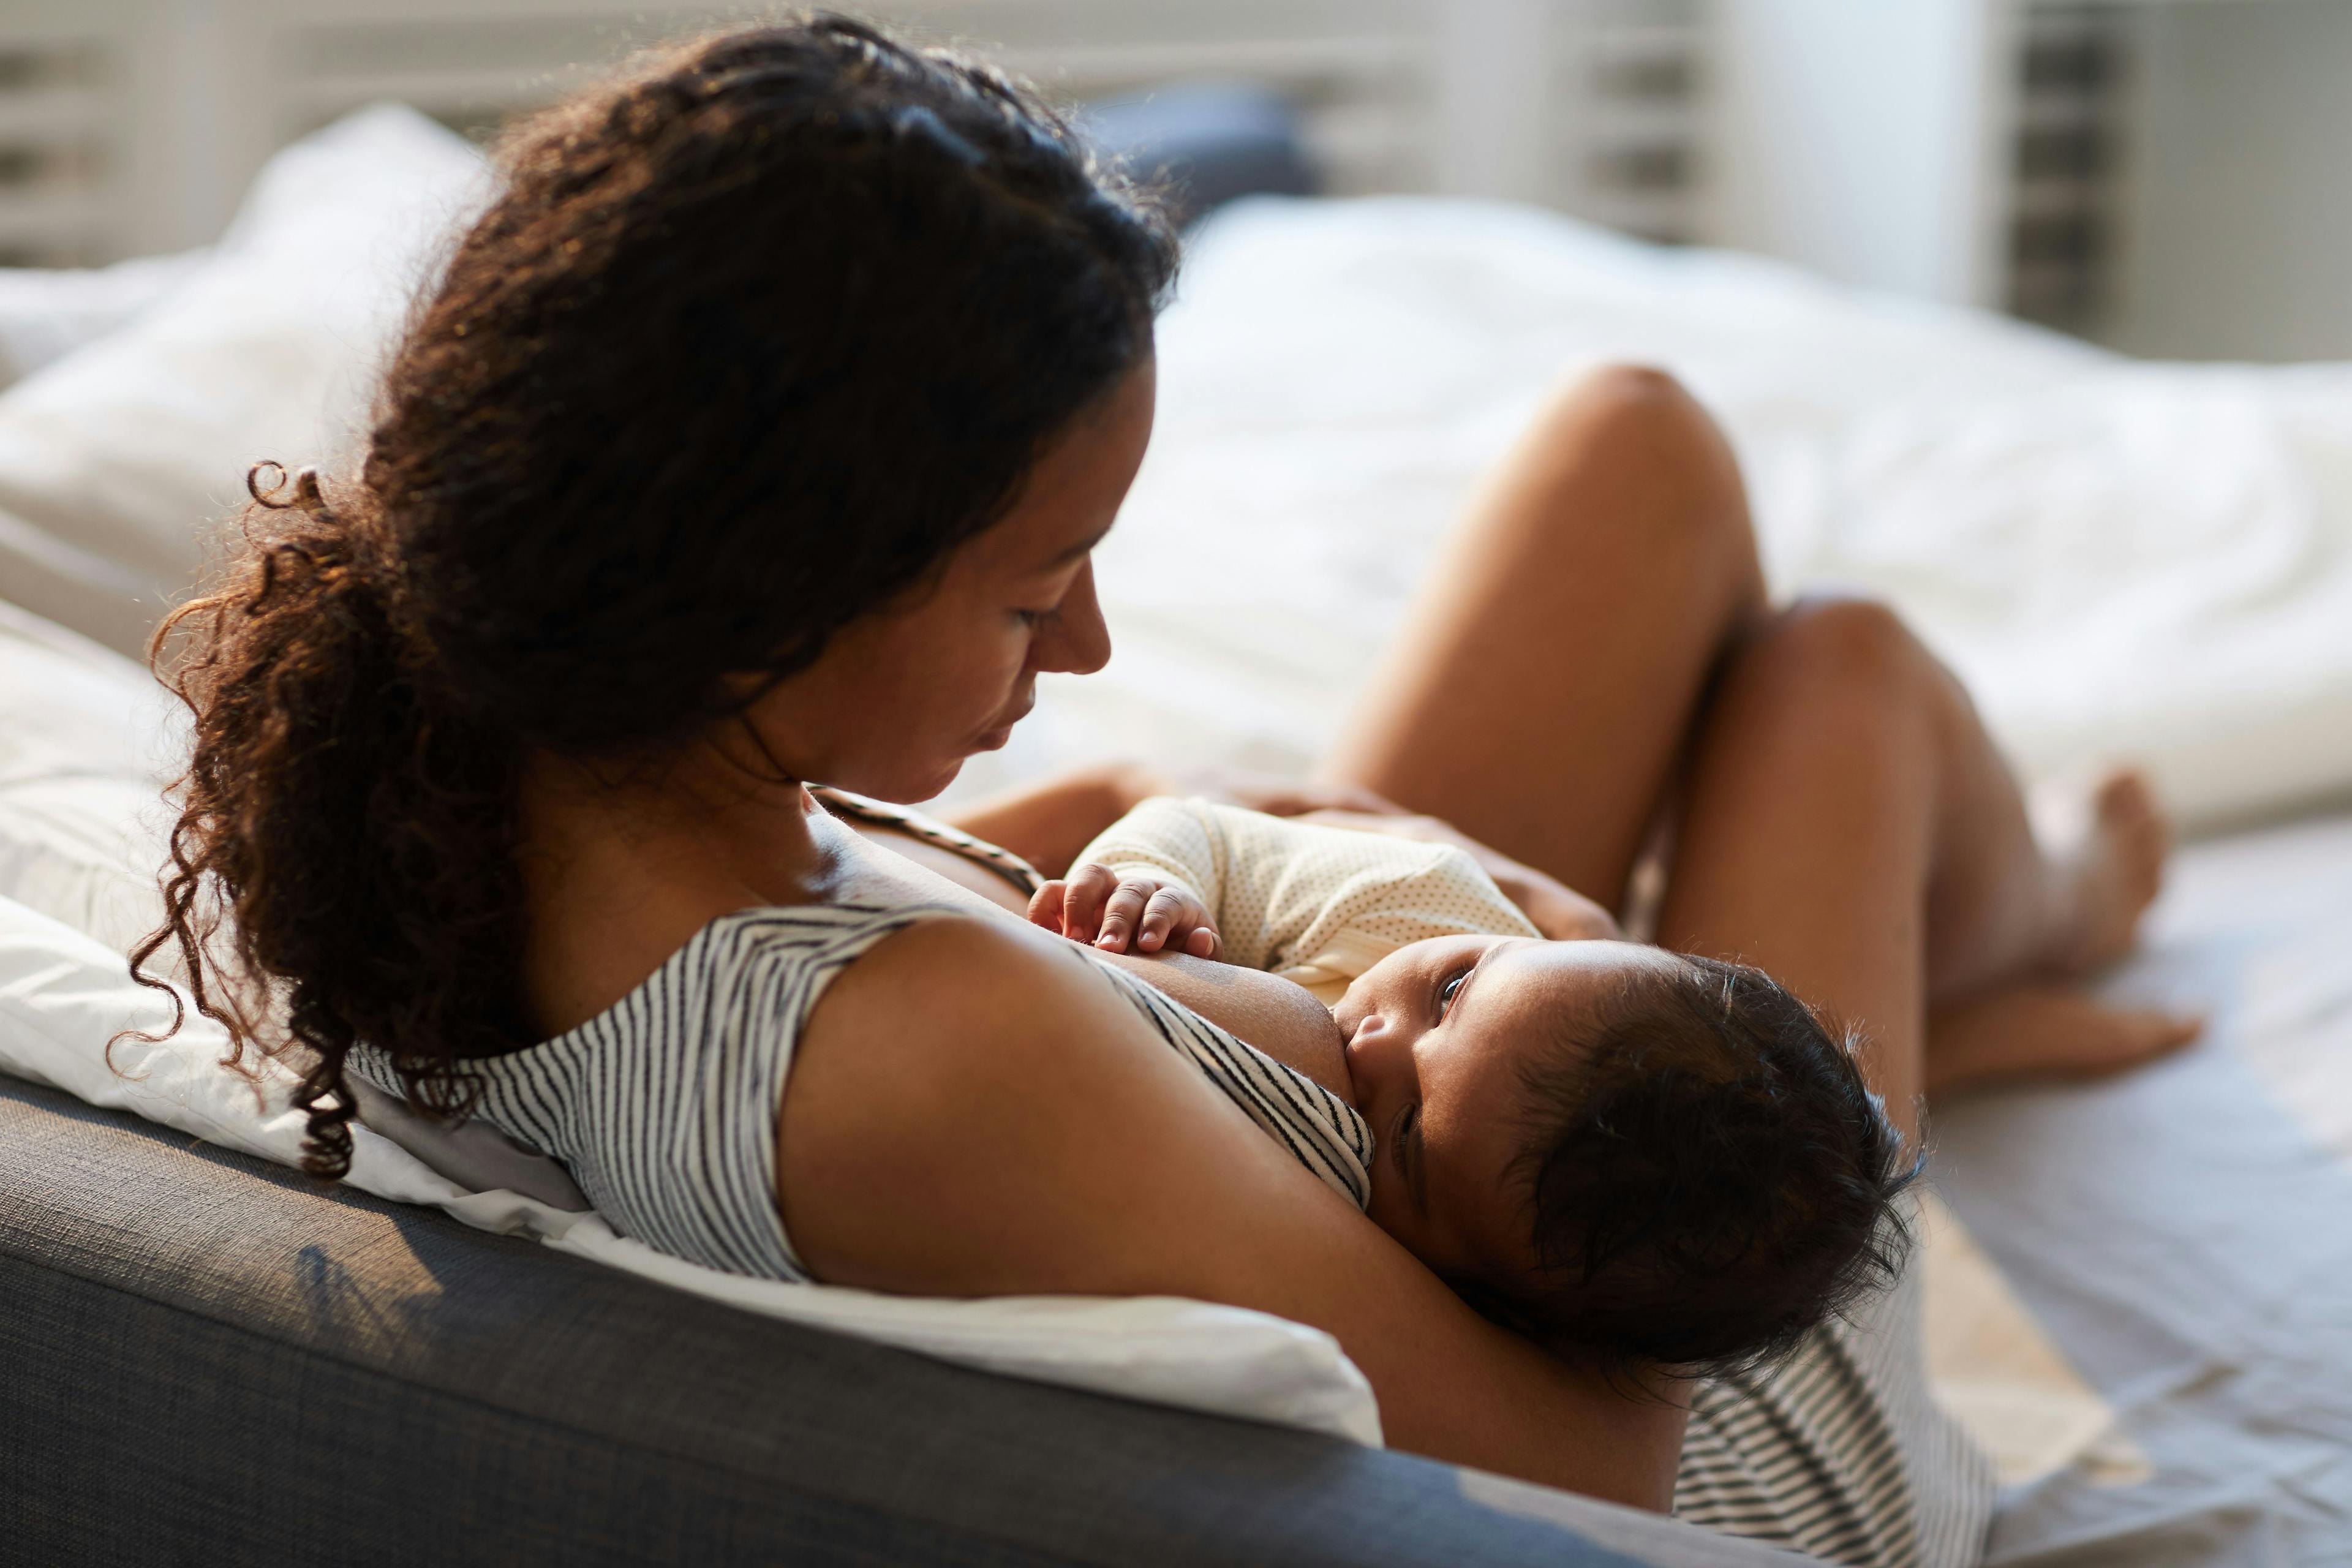 Disparities in breastfeeding duration